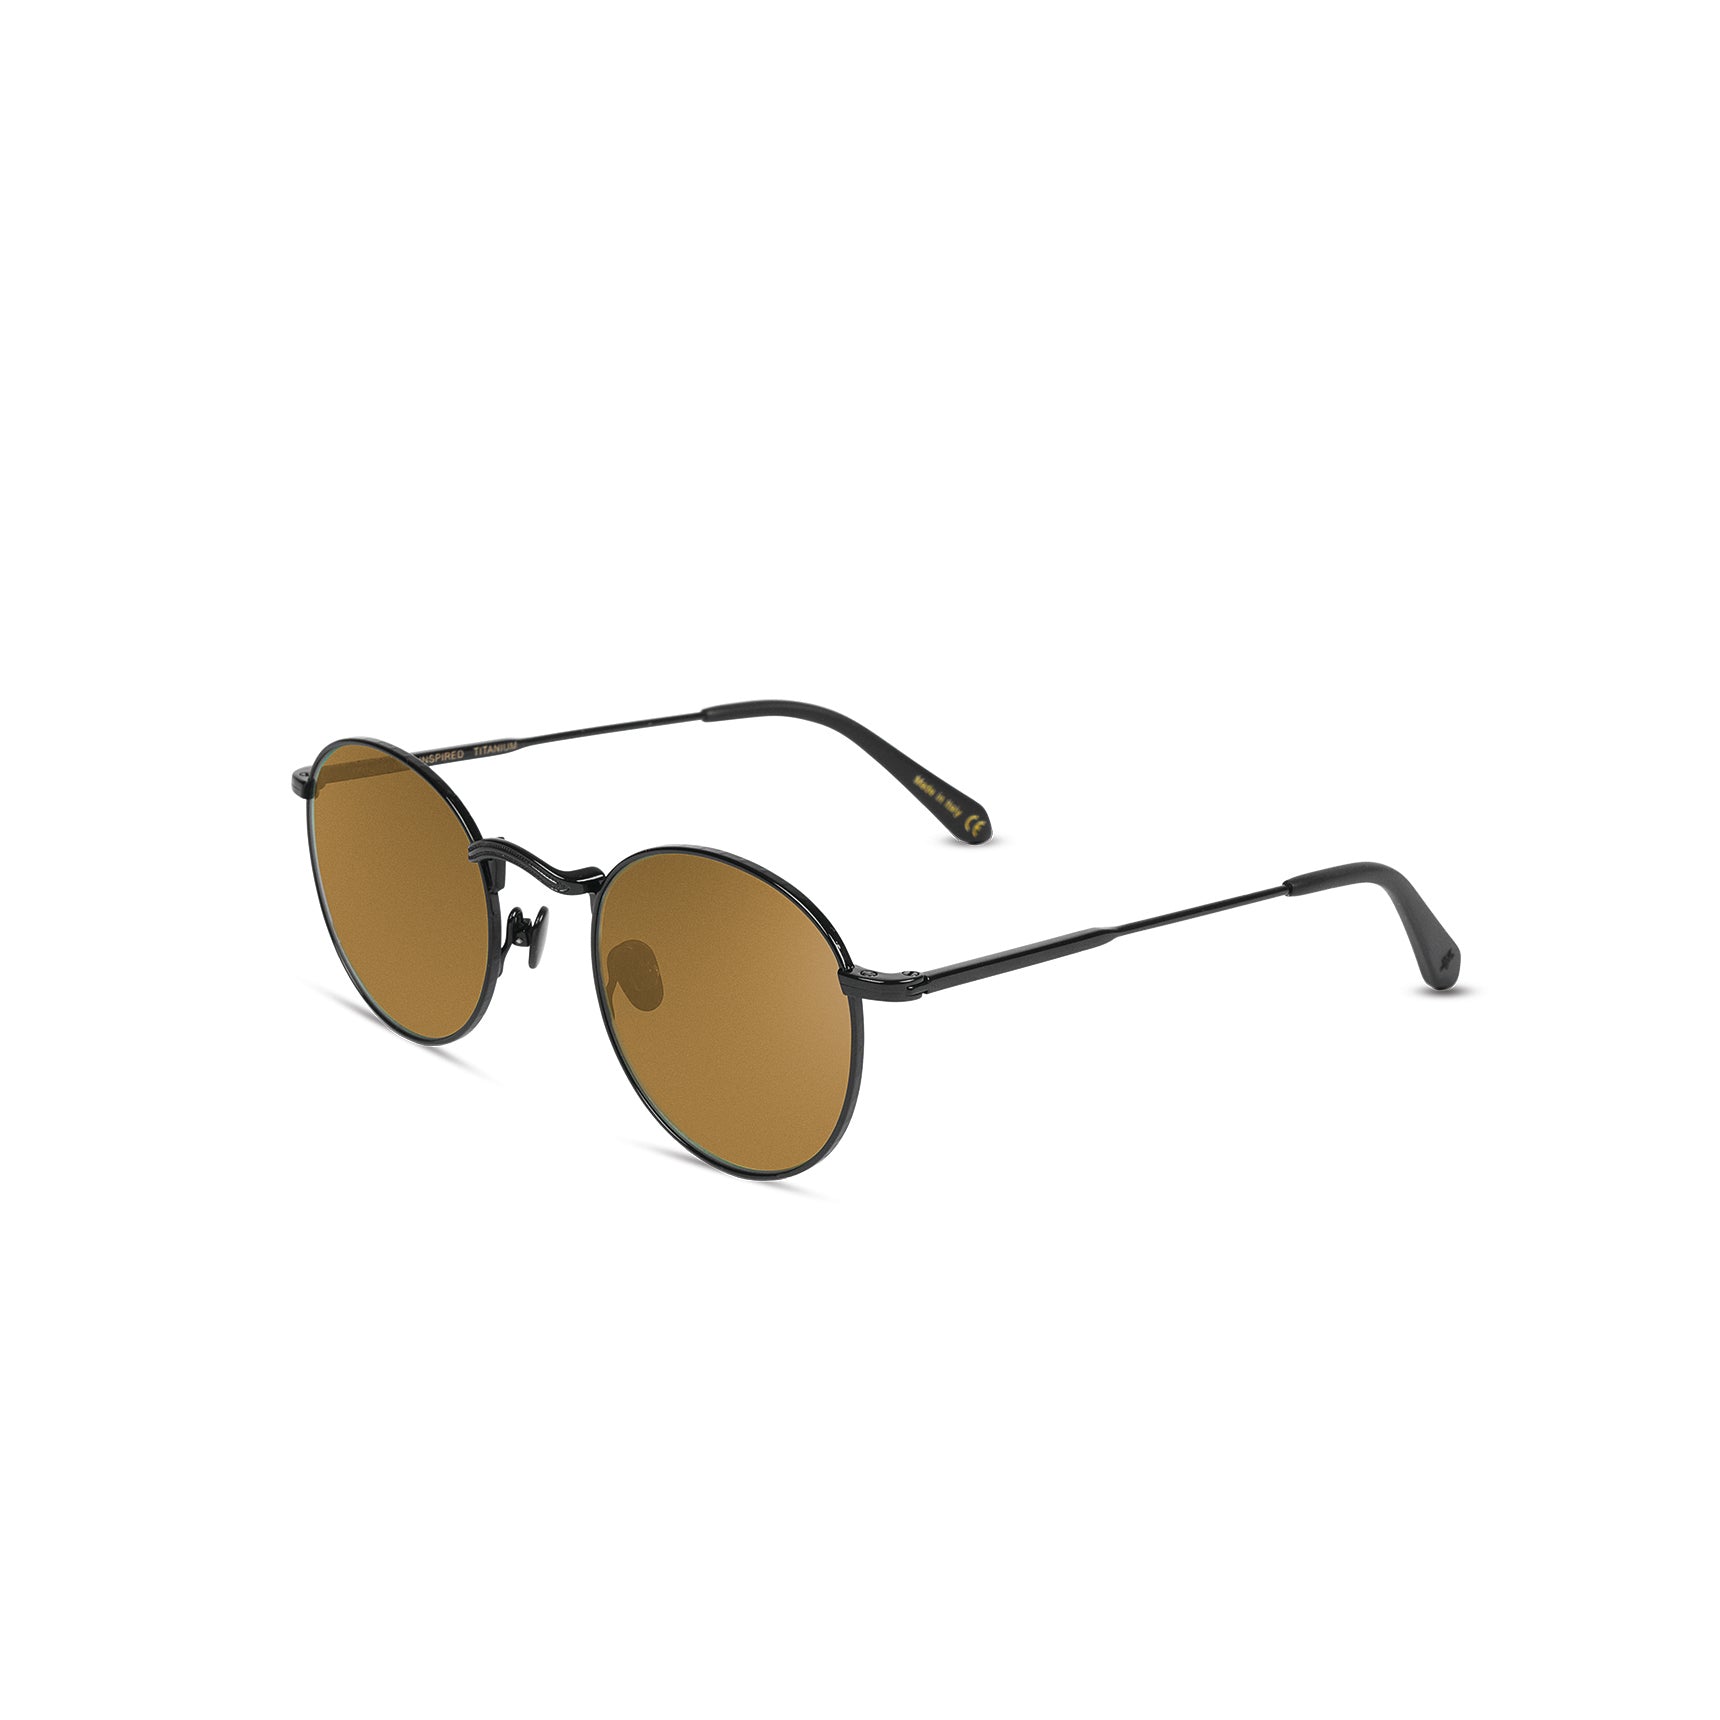 Essence Sunglasses